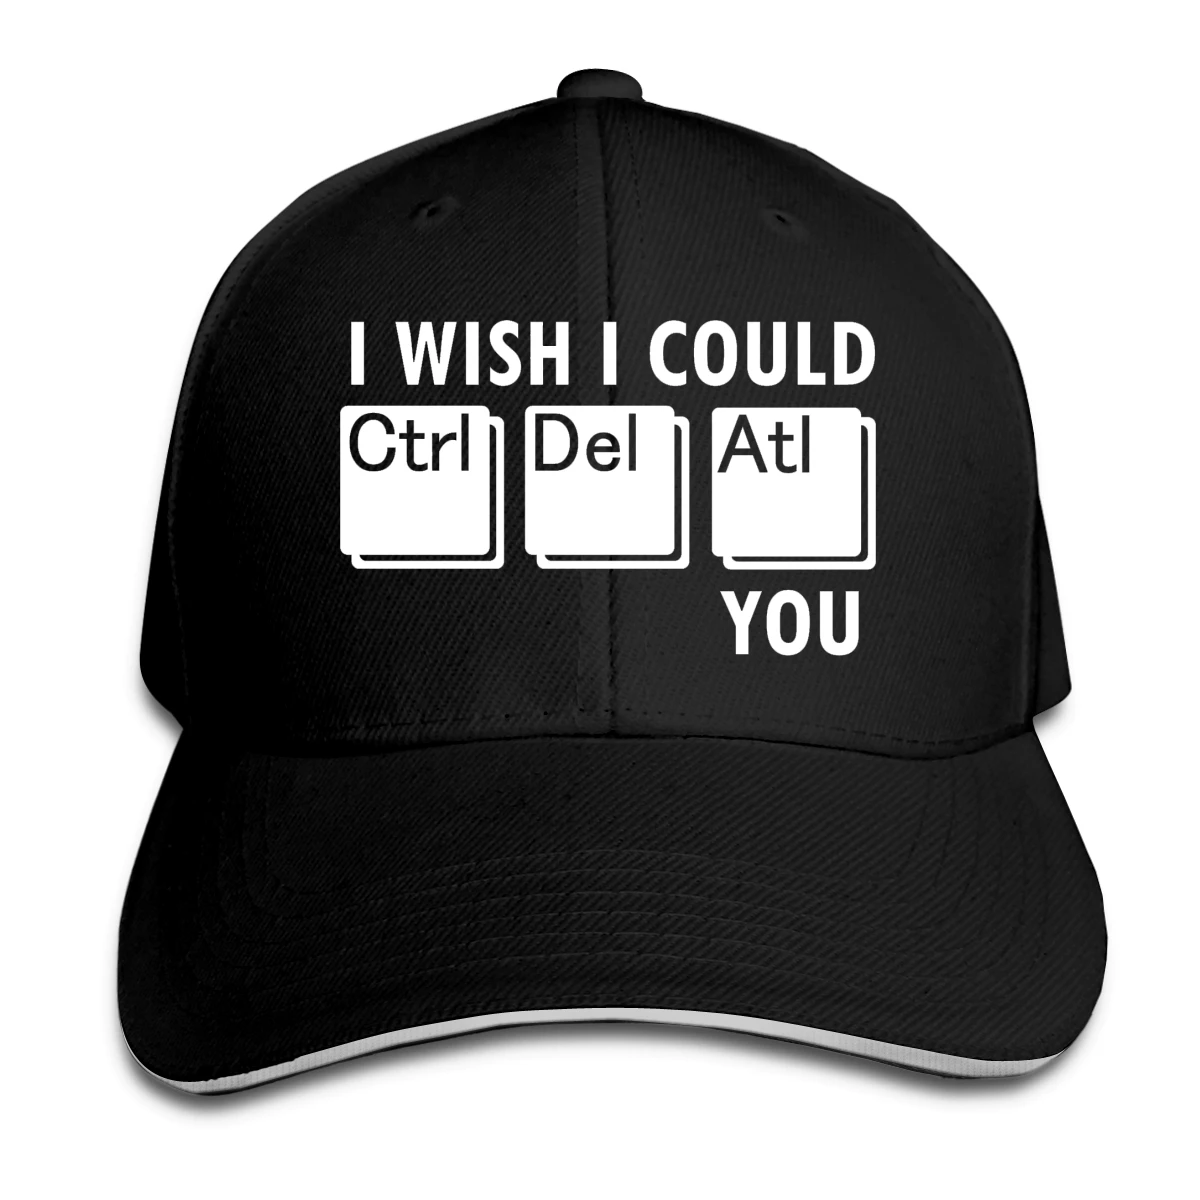 

I Wish I Could Ctrl Atl Del You Hat Baseball Cap for Men Women Fashion Adjustable Sun Hat